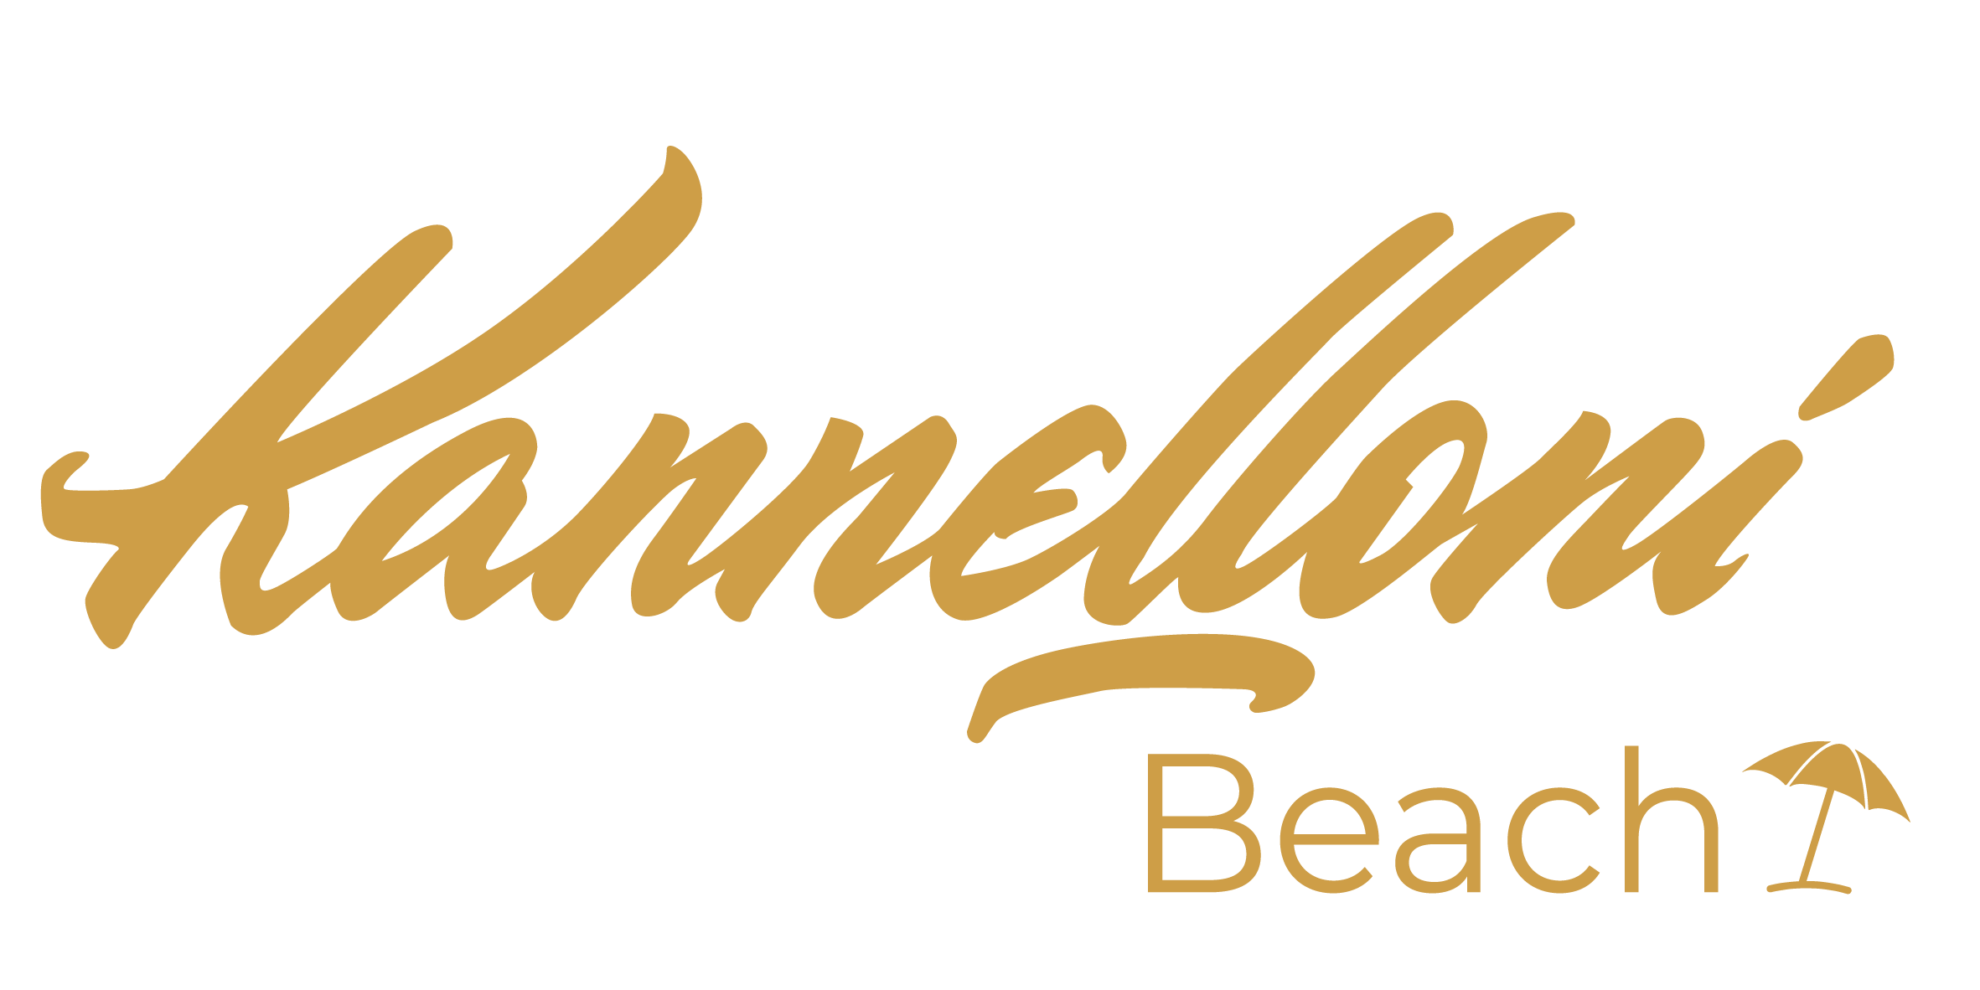 Kannelloni Beach Logo